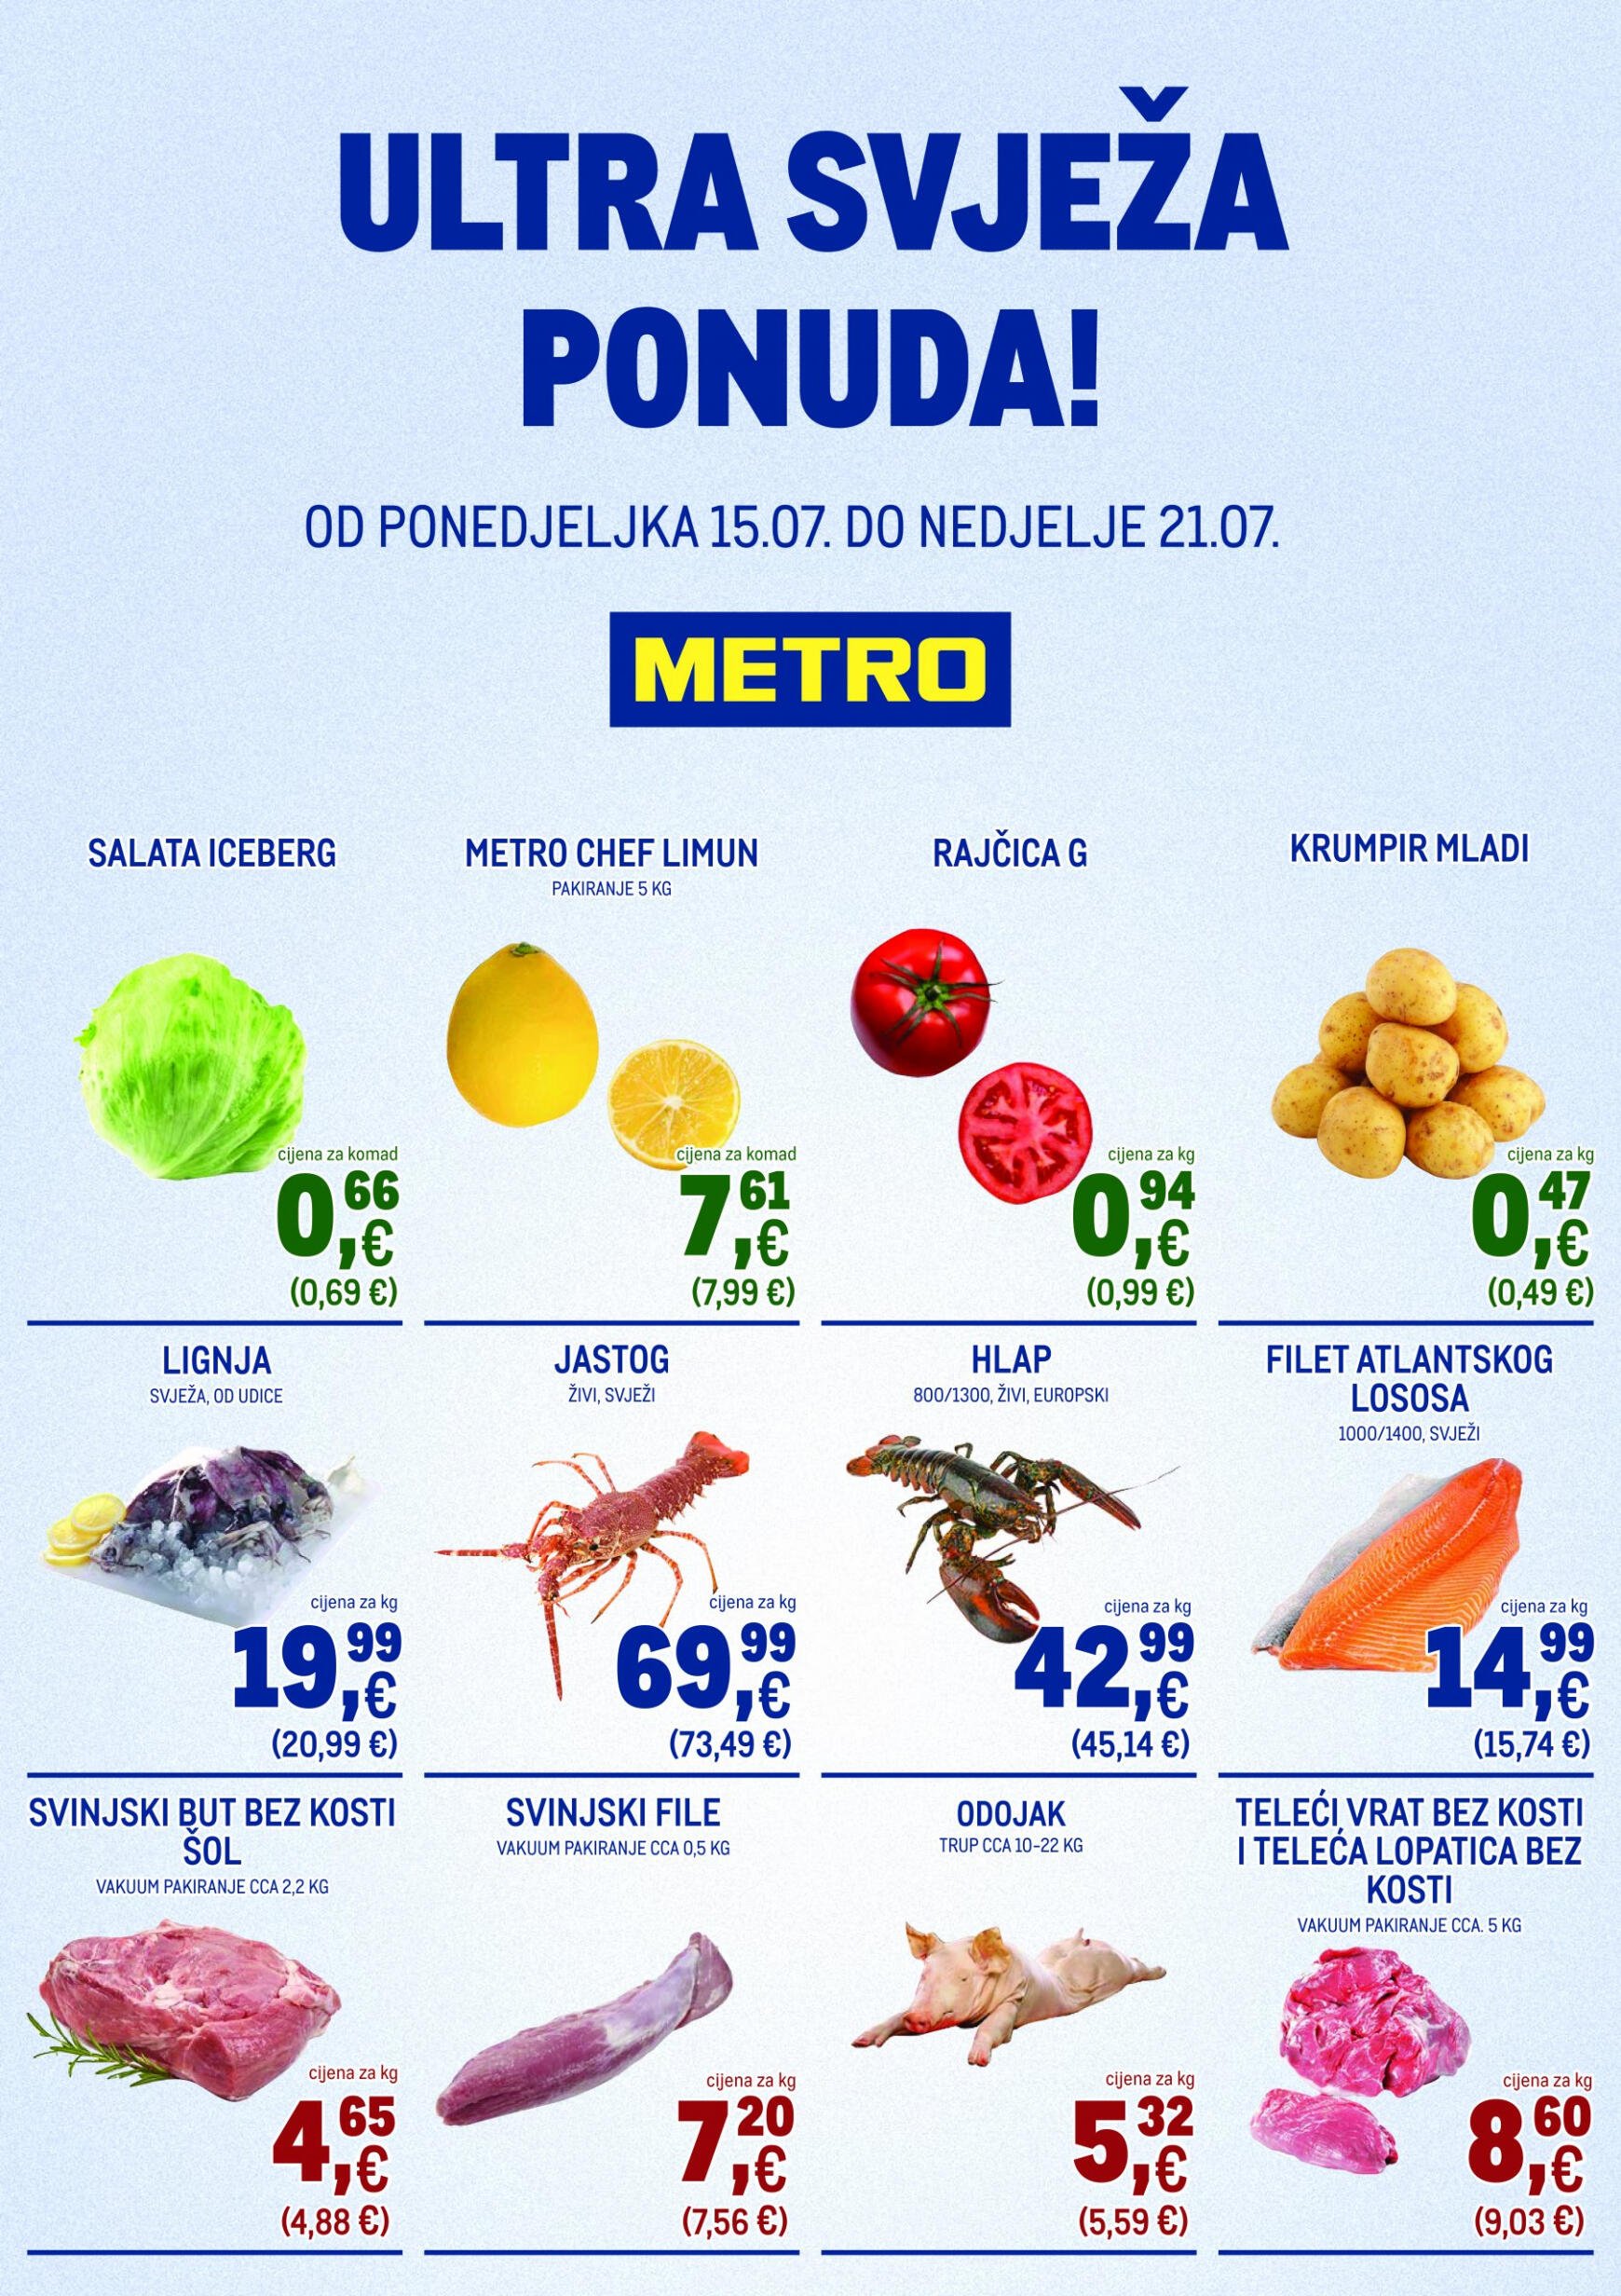 metro - Novi katalog Metro - Ultra svježa ponuda 15.07. - 21.07.